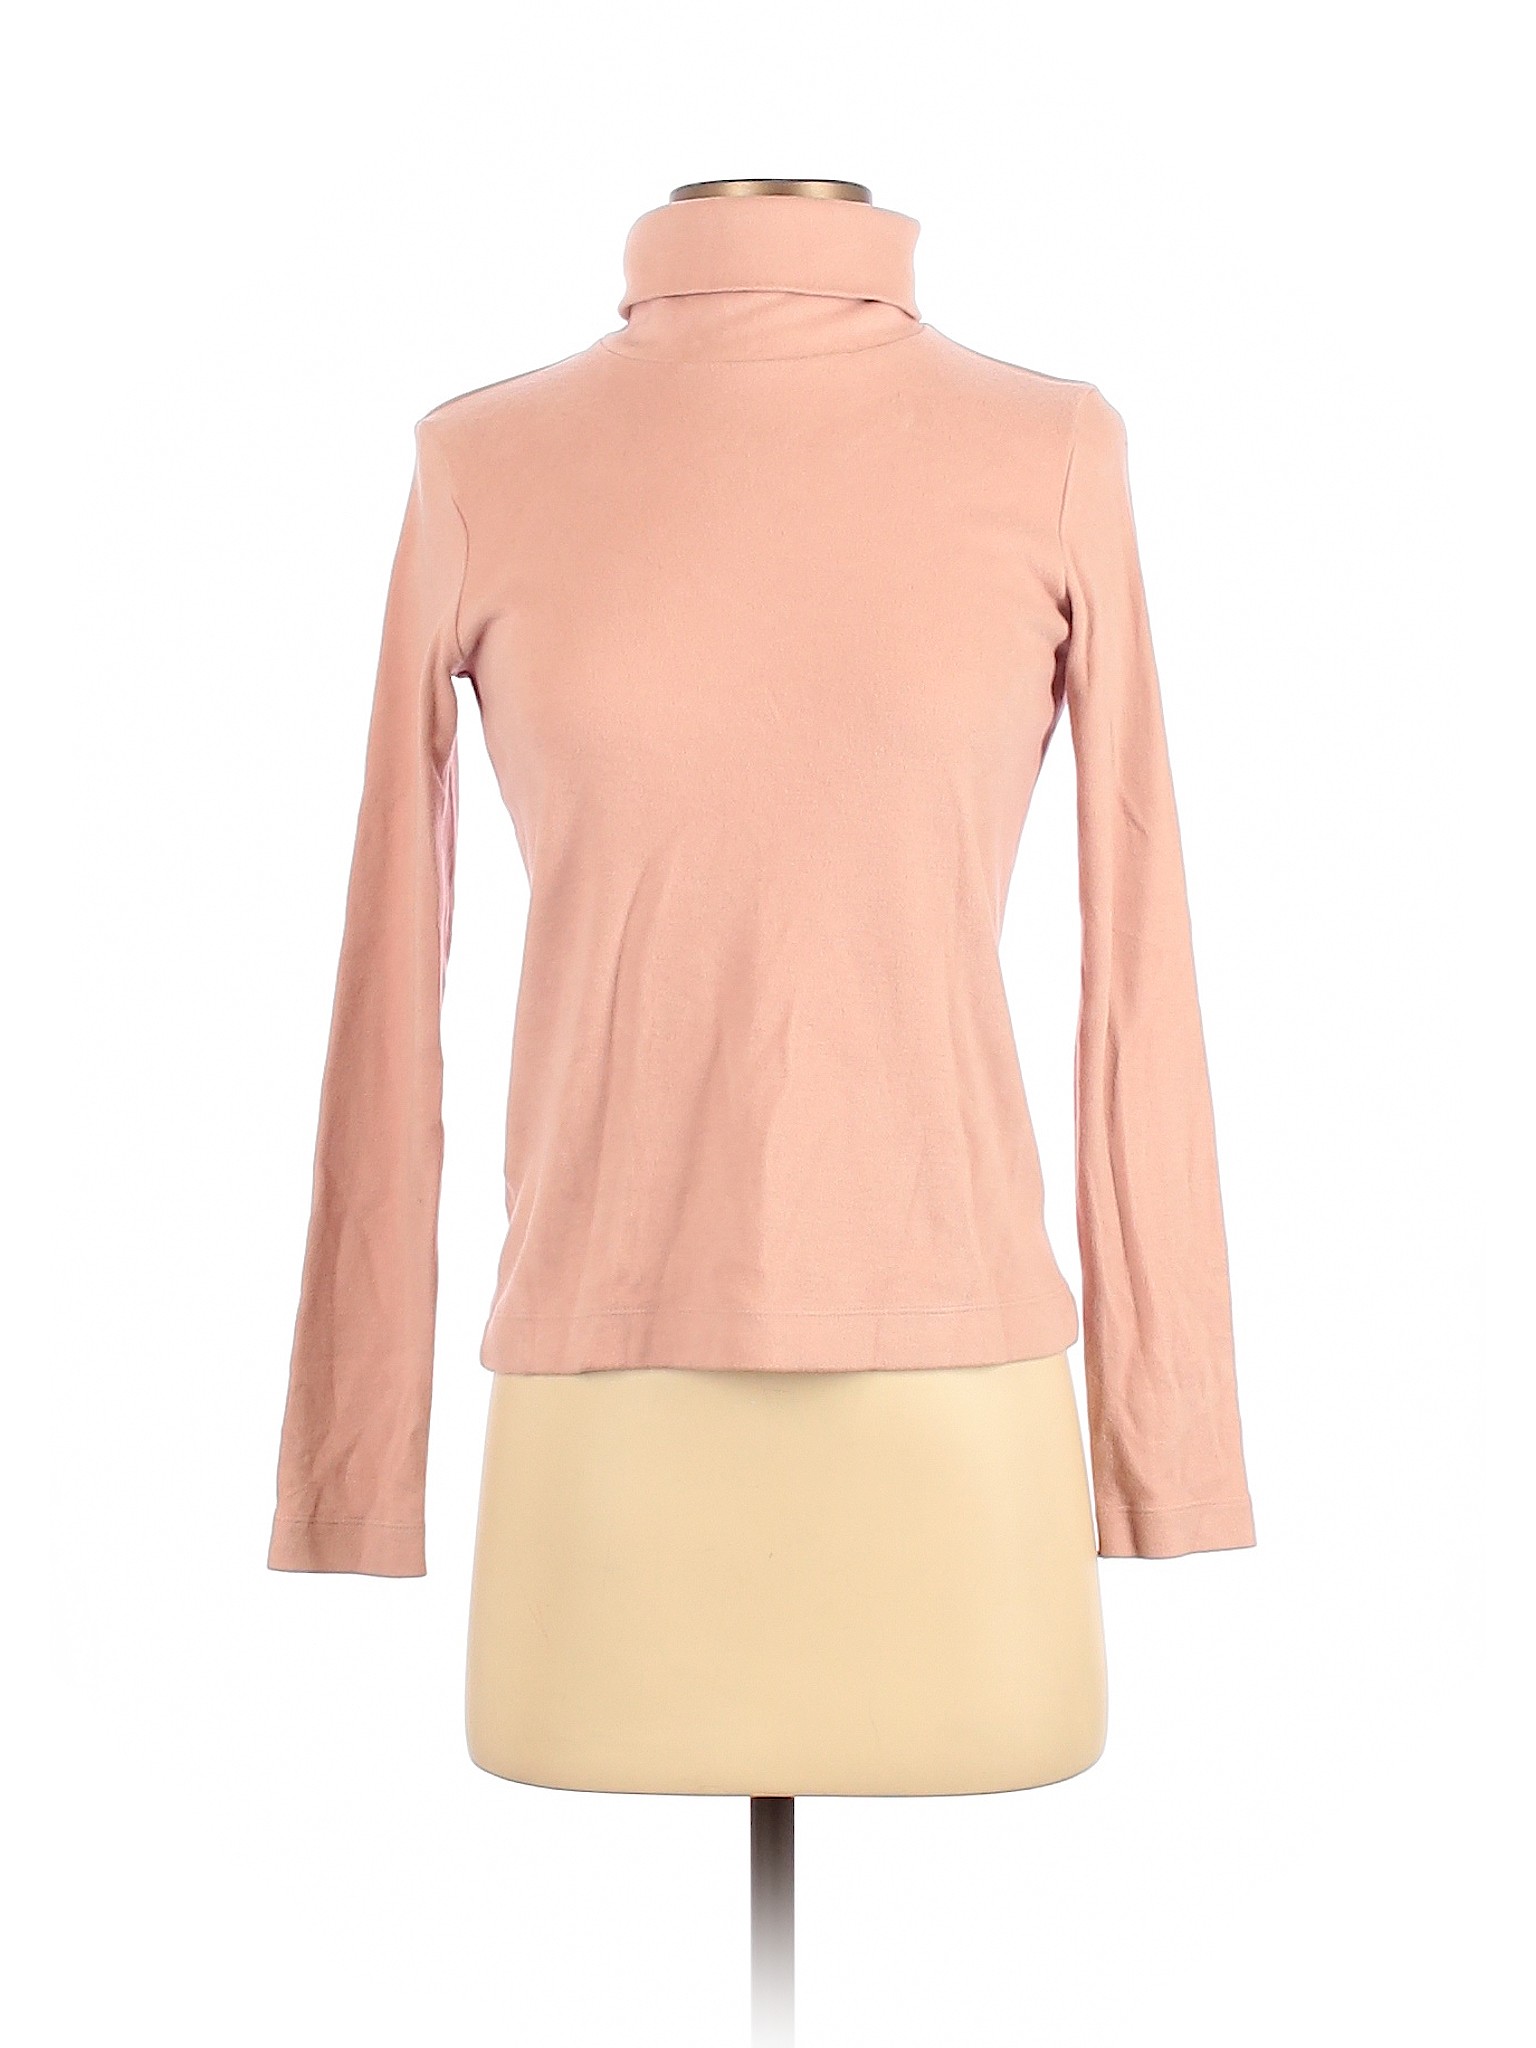 Uniqlo Women Pink Turtleneck Sweater XS | eBay